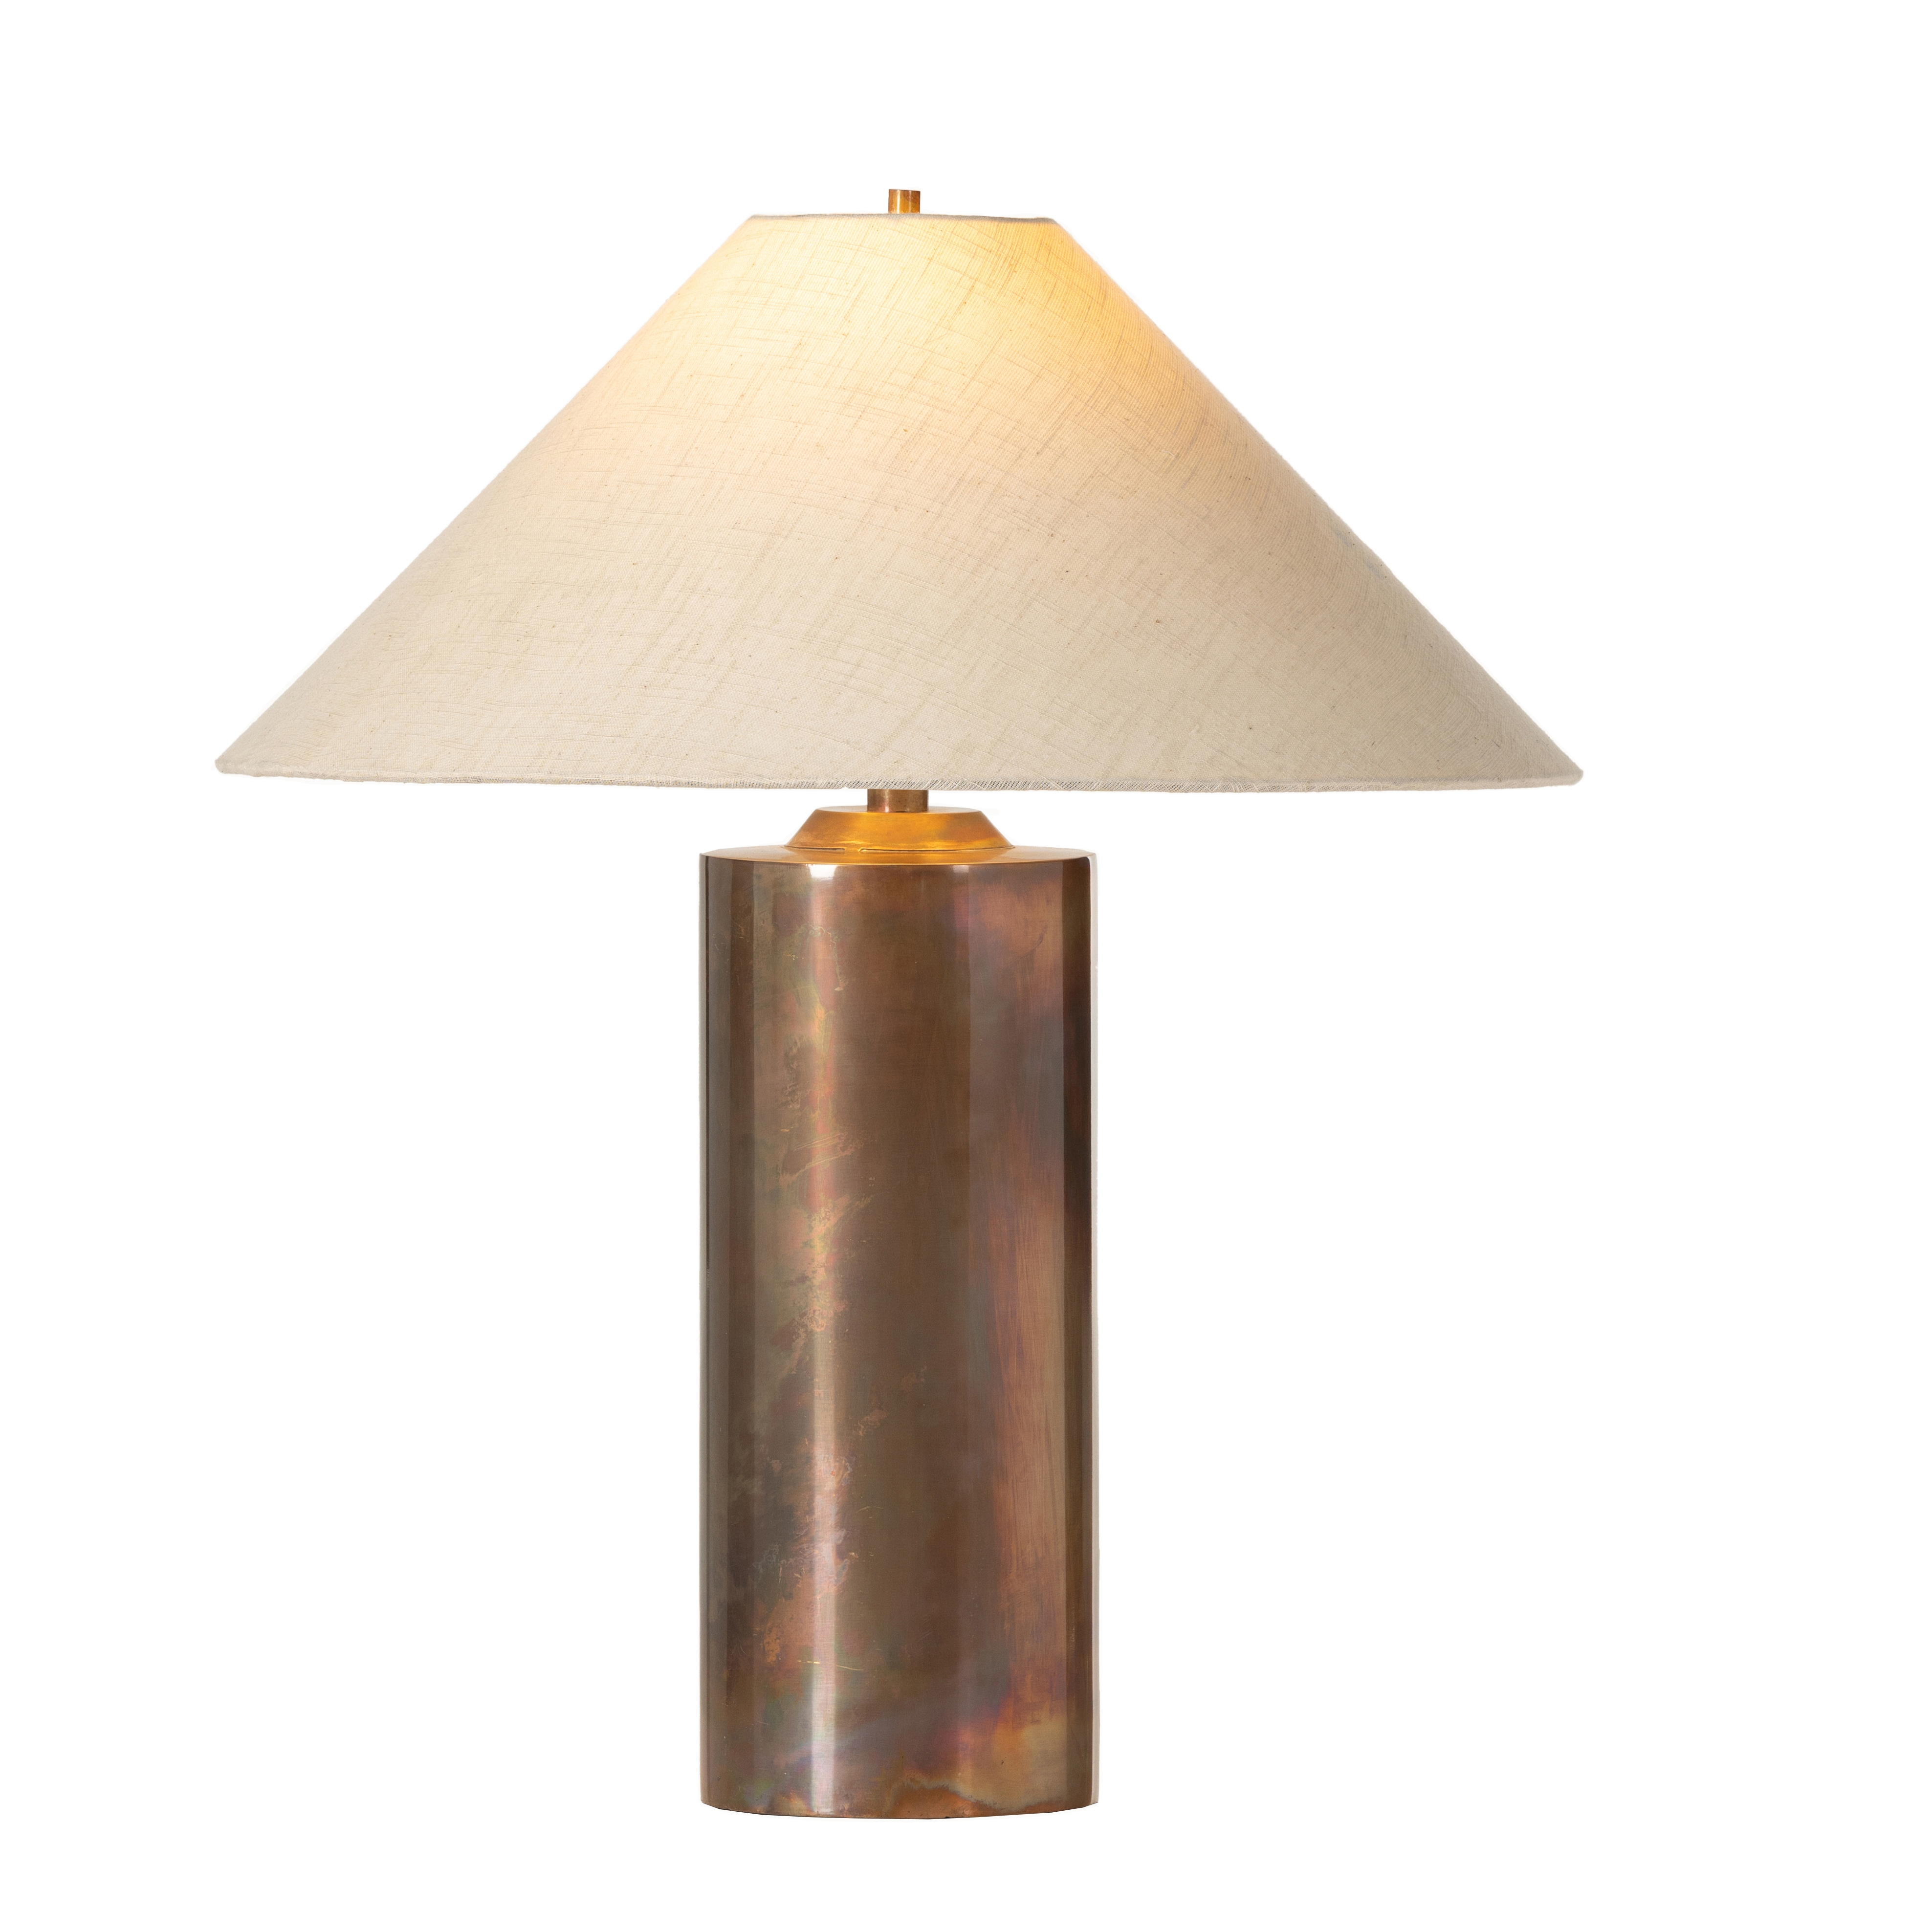 Seaton Table Lamp-Iridescent Acid Wash - Image 3